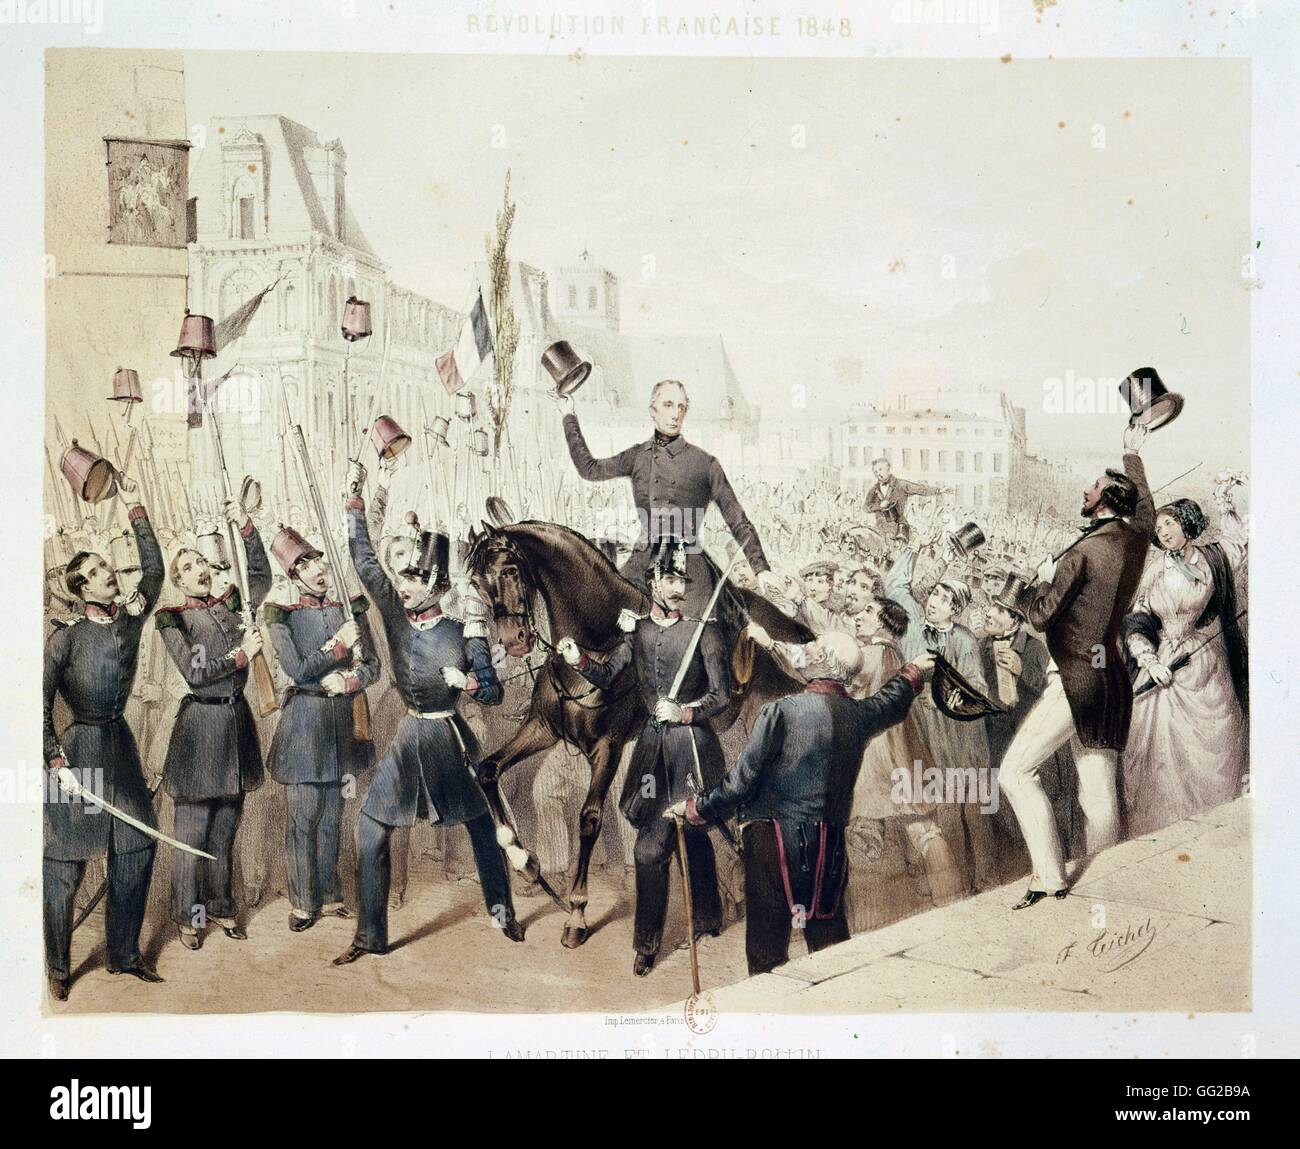 Lamartine and Ledru-Rollin back from the Hotel de ville - 1848 Revolution  19th century Stock Photo